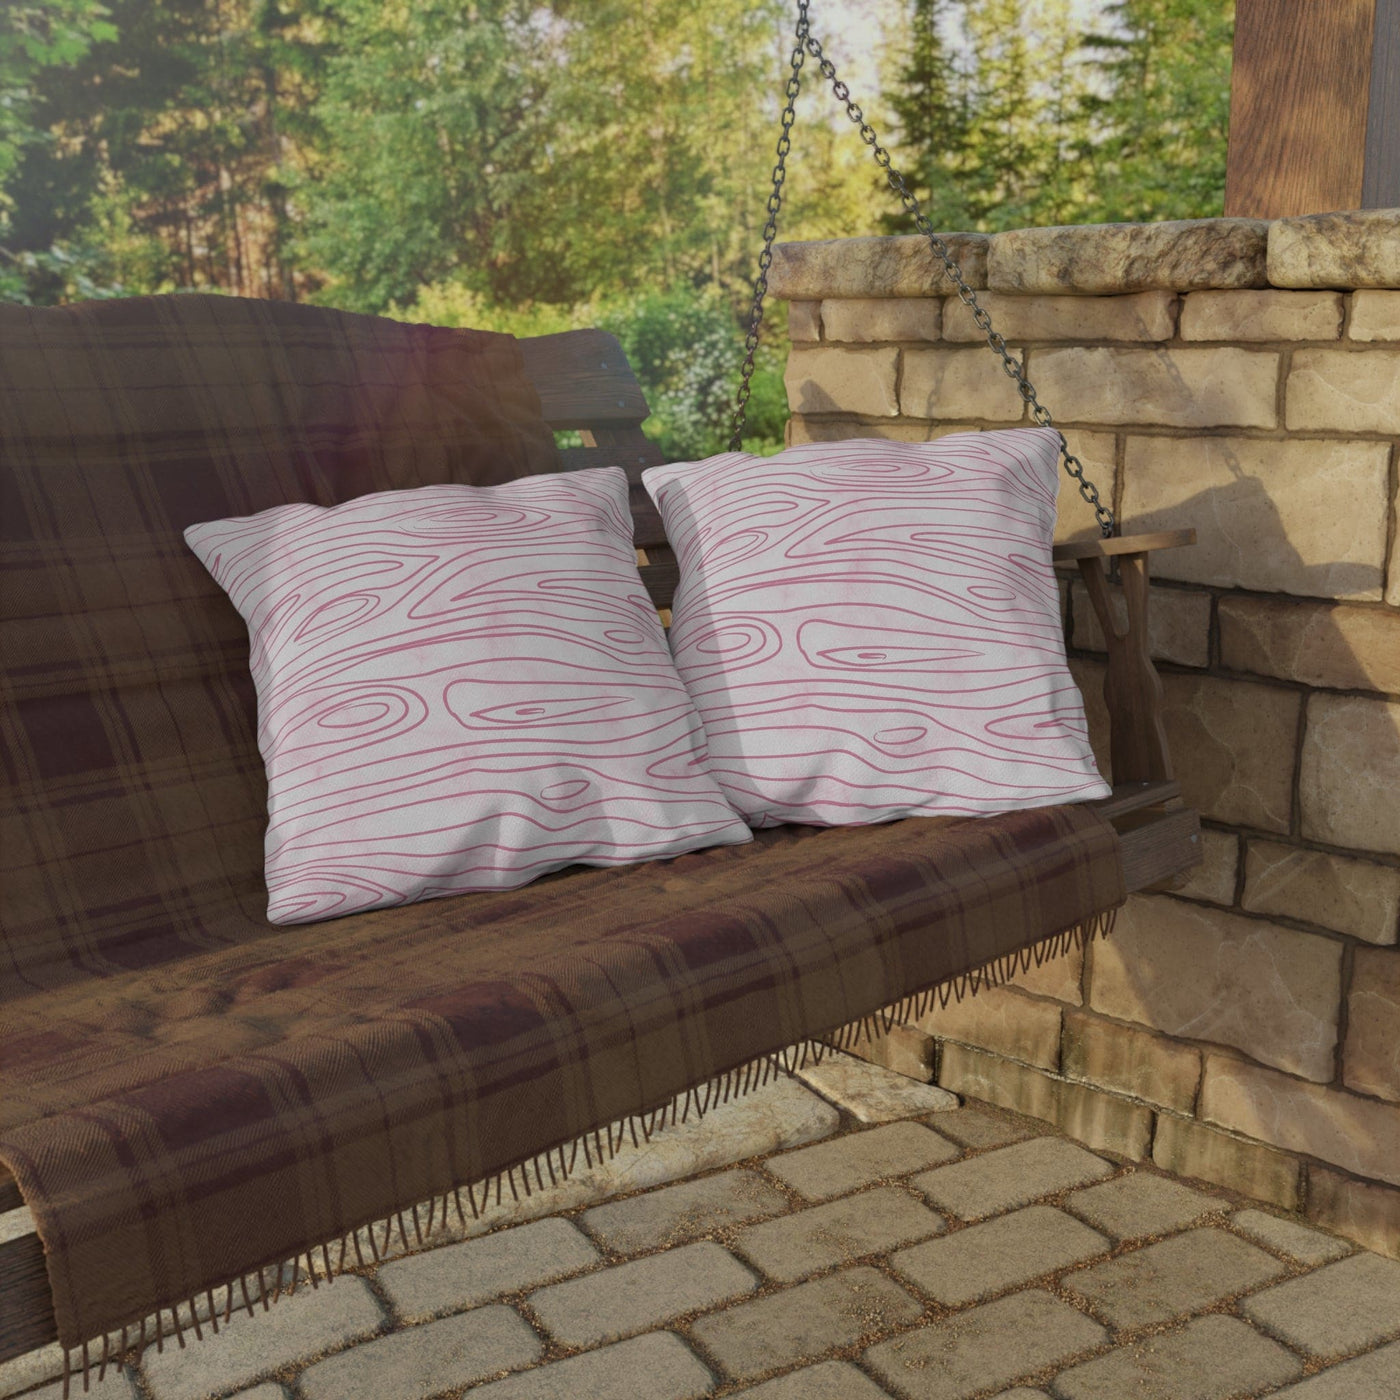 Decorative Outdoor Pillows - Set Of 2 Pink Line Art Sketch Print | Throw Indoor